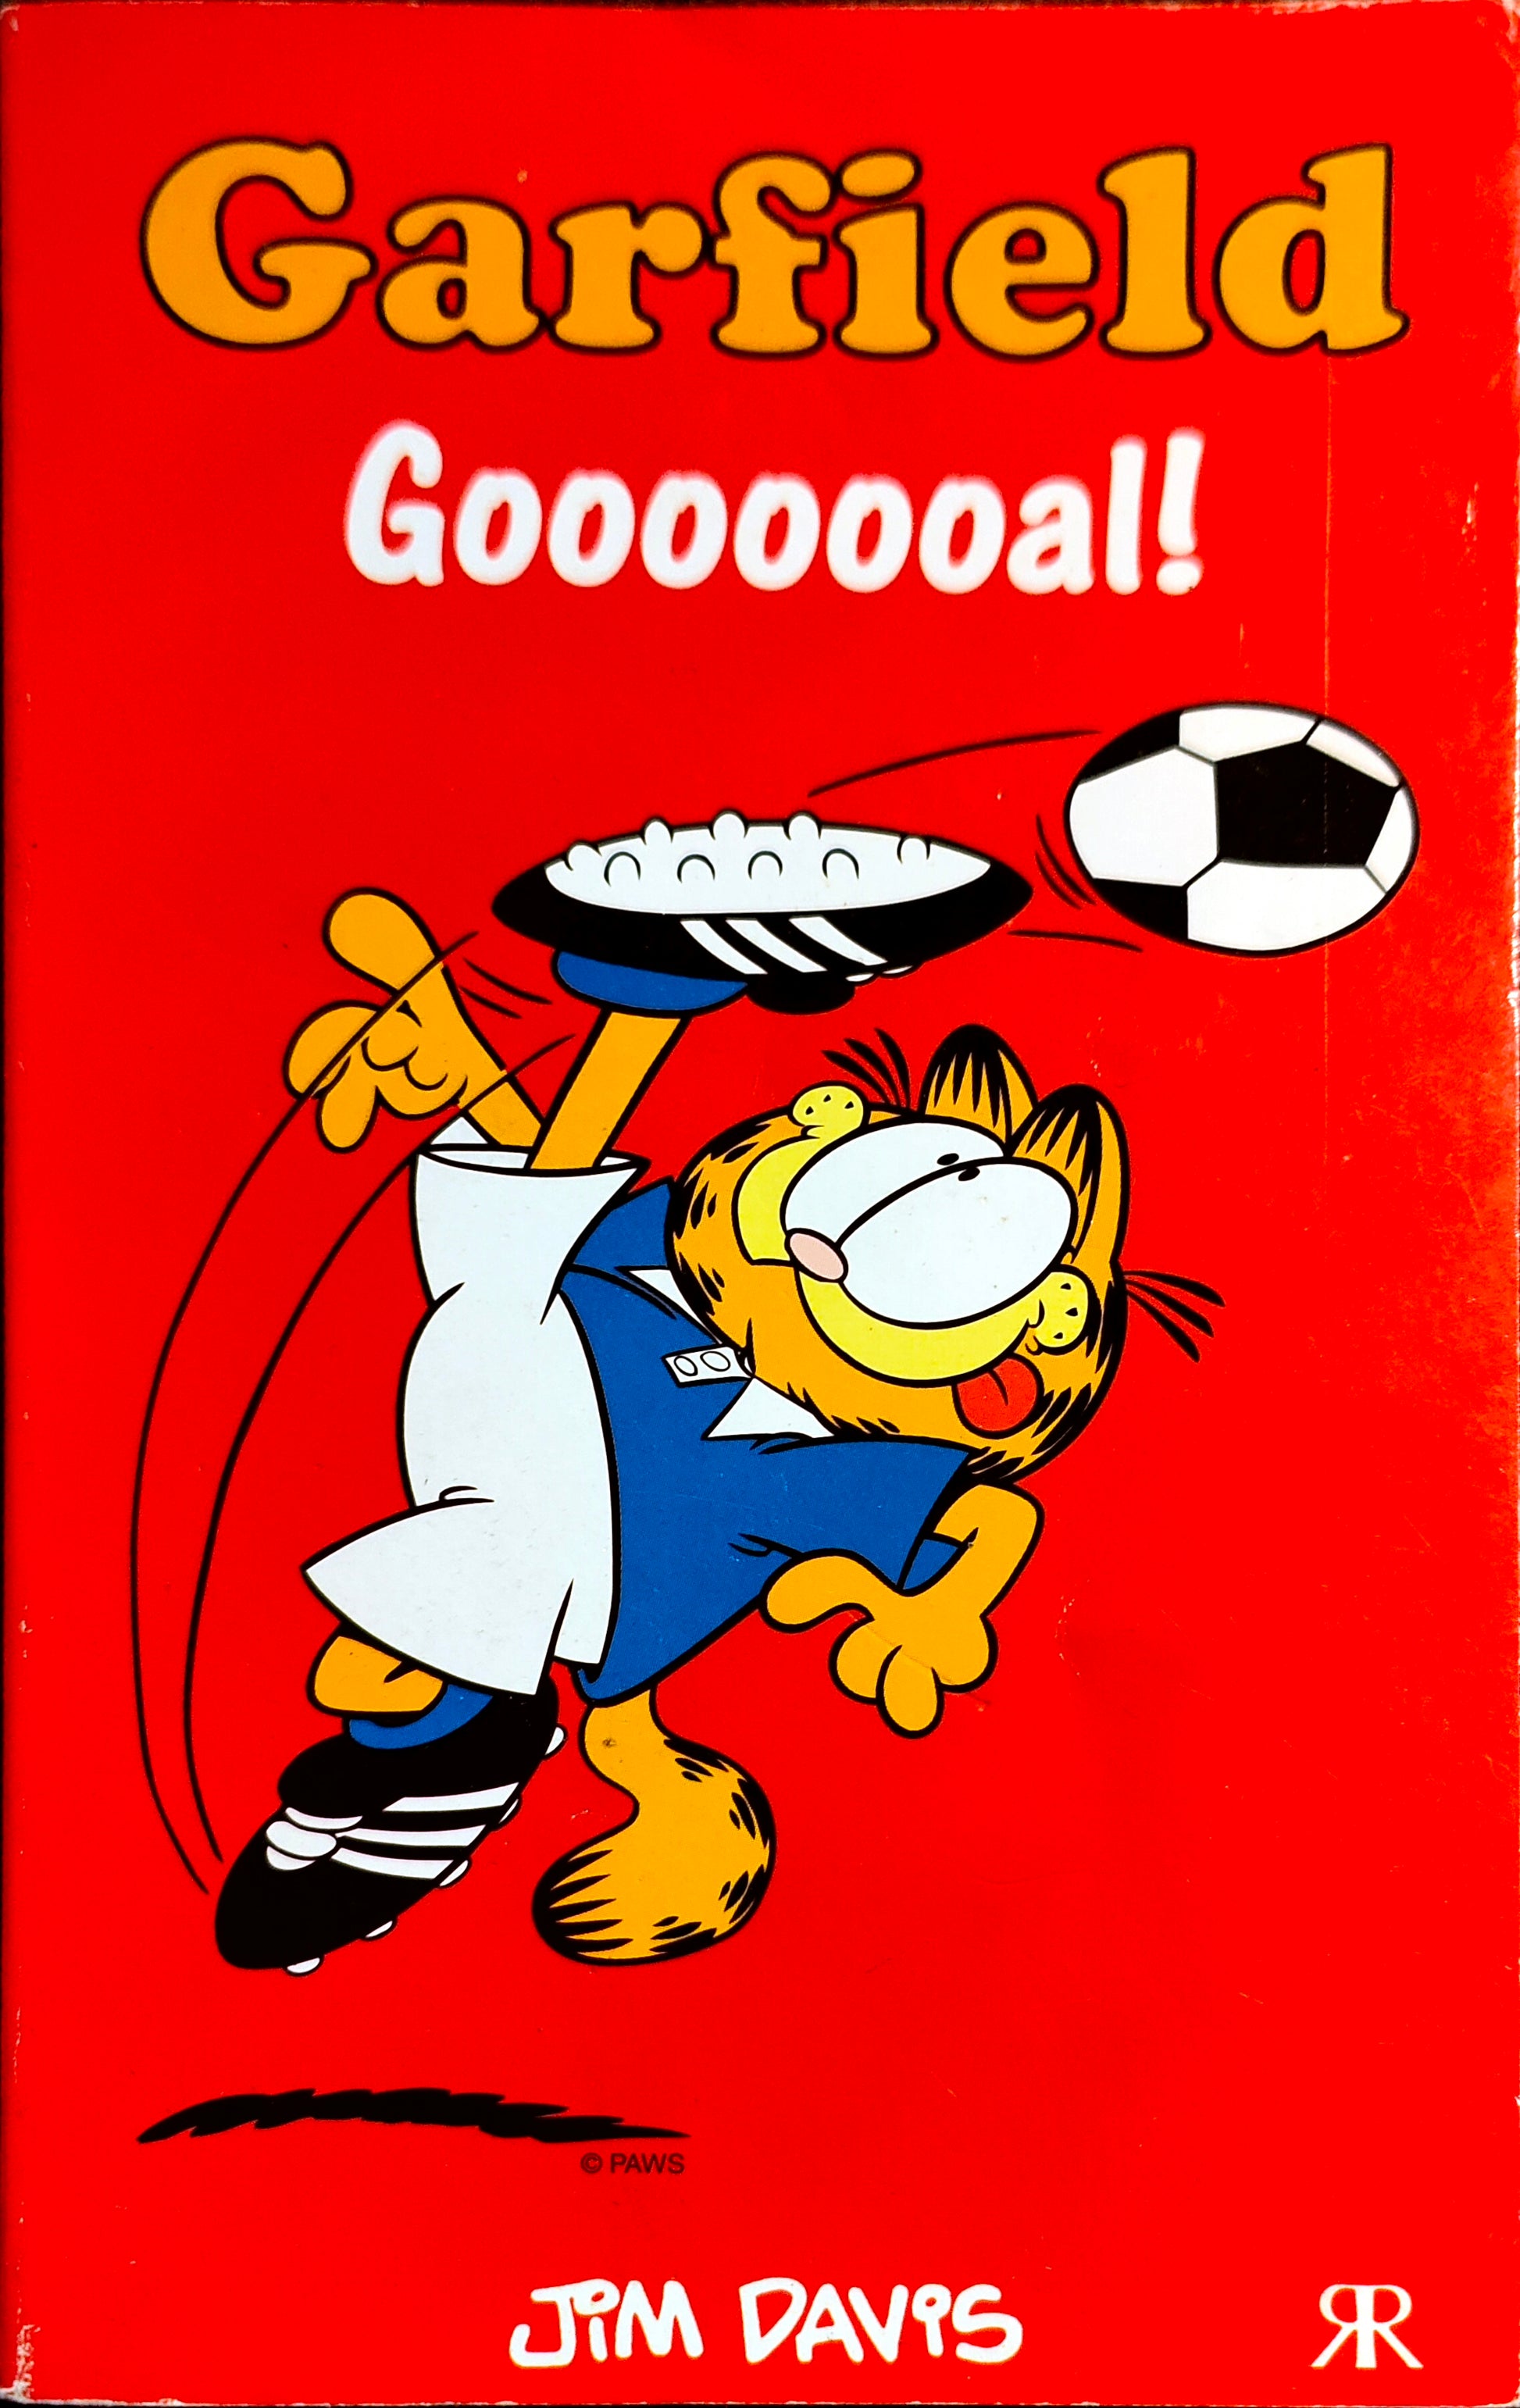 LIVRO - Garfield - Gooooooal!: No. 41 Garfield Pocket Books by Davis, Jim Paperback - USADO